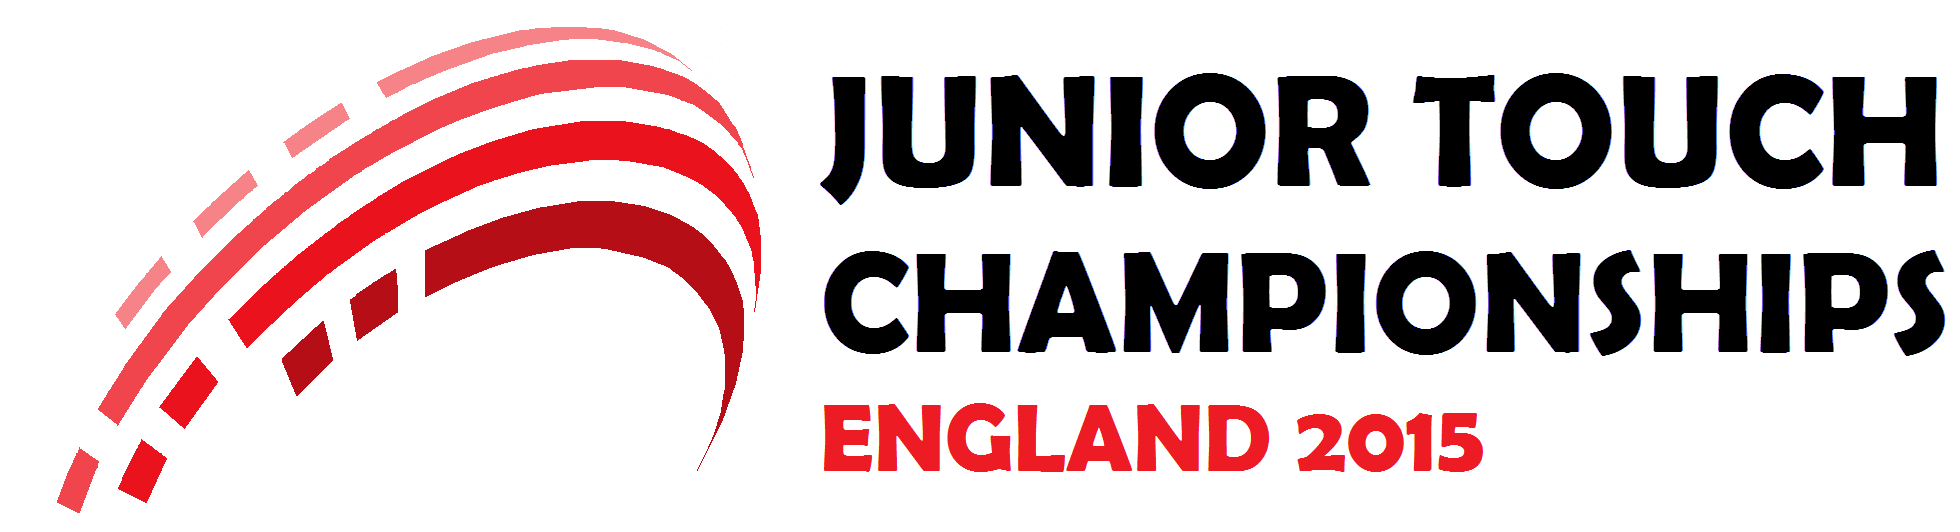 England to host JTC2015